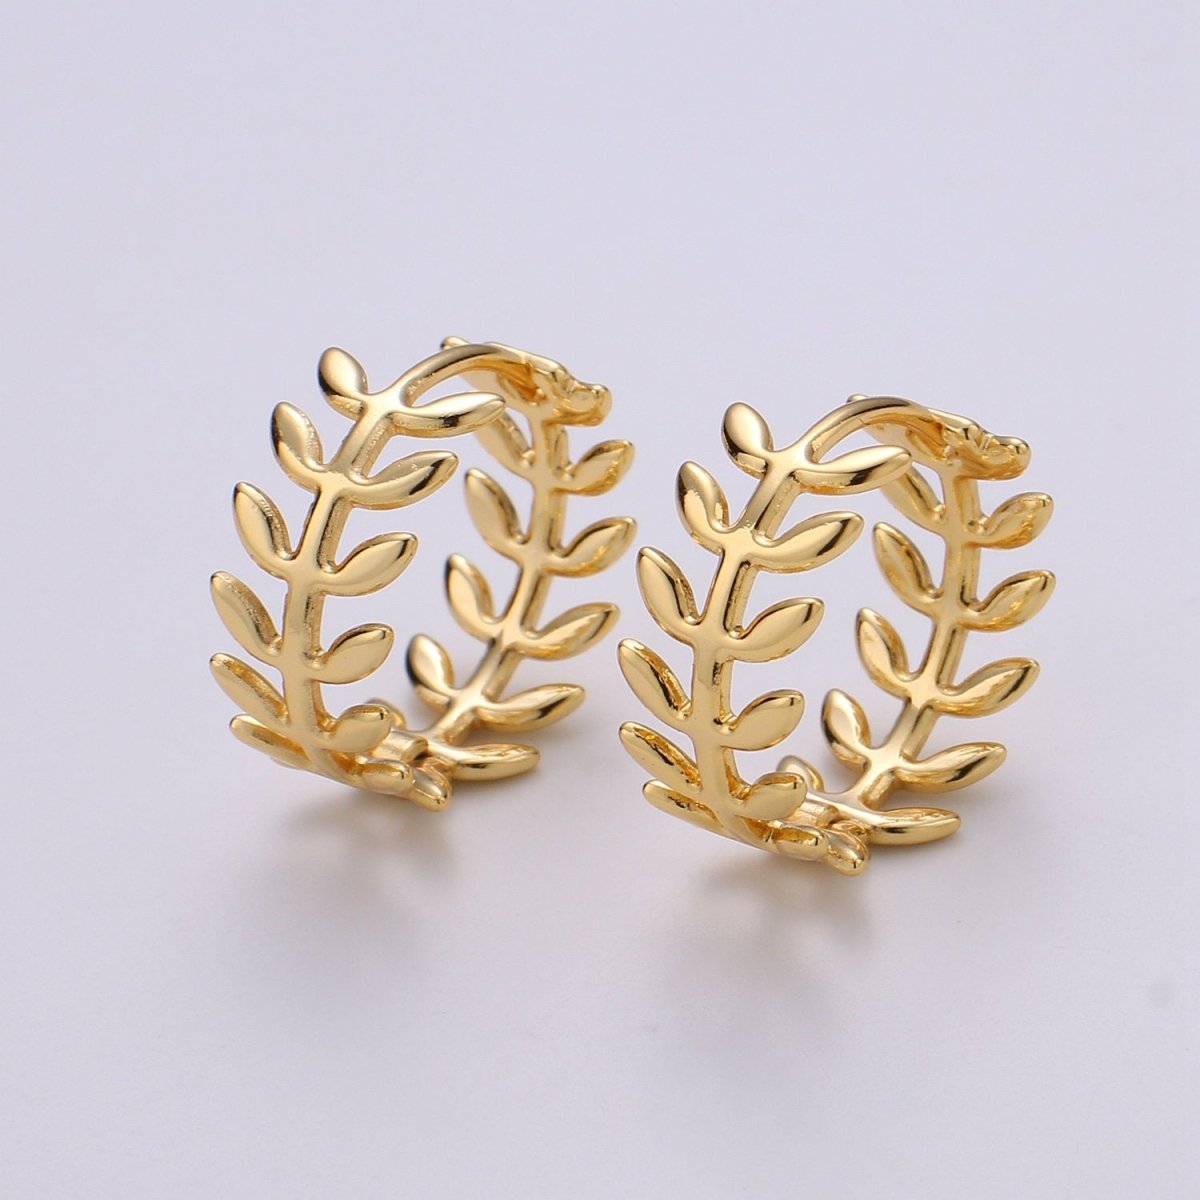 Dainty Gold Leaf Hoop Earrings – 24k Gold Filled Hoop Earring, Inspired by Ancient Greek Laurel Wreaths artistry Jewelry Q-322 - DLUXCA